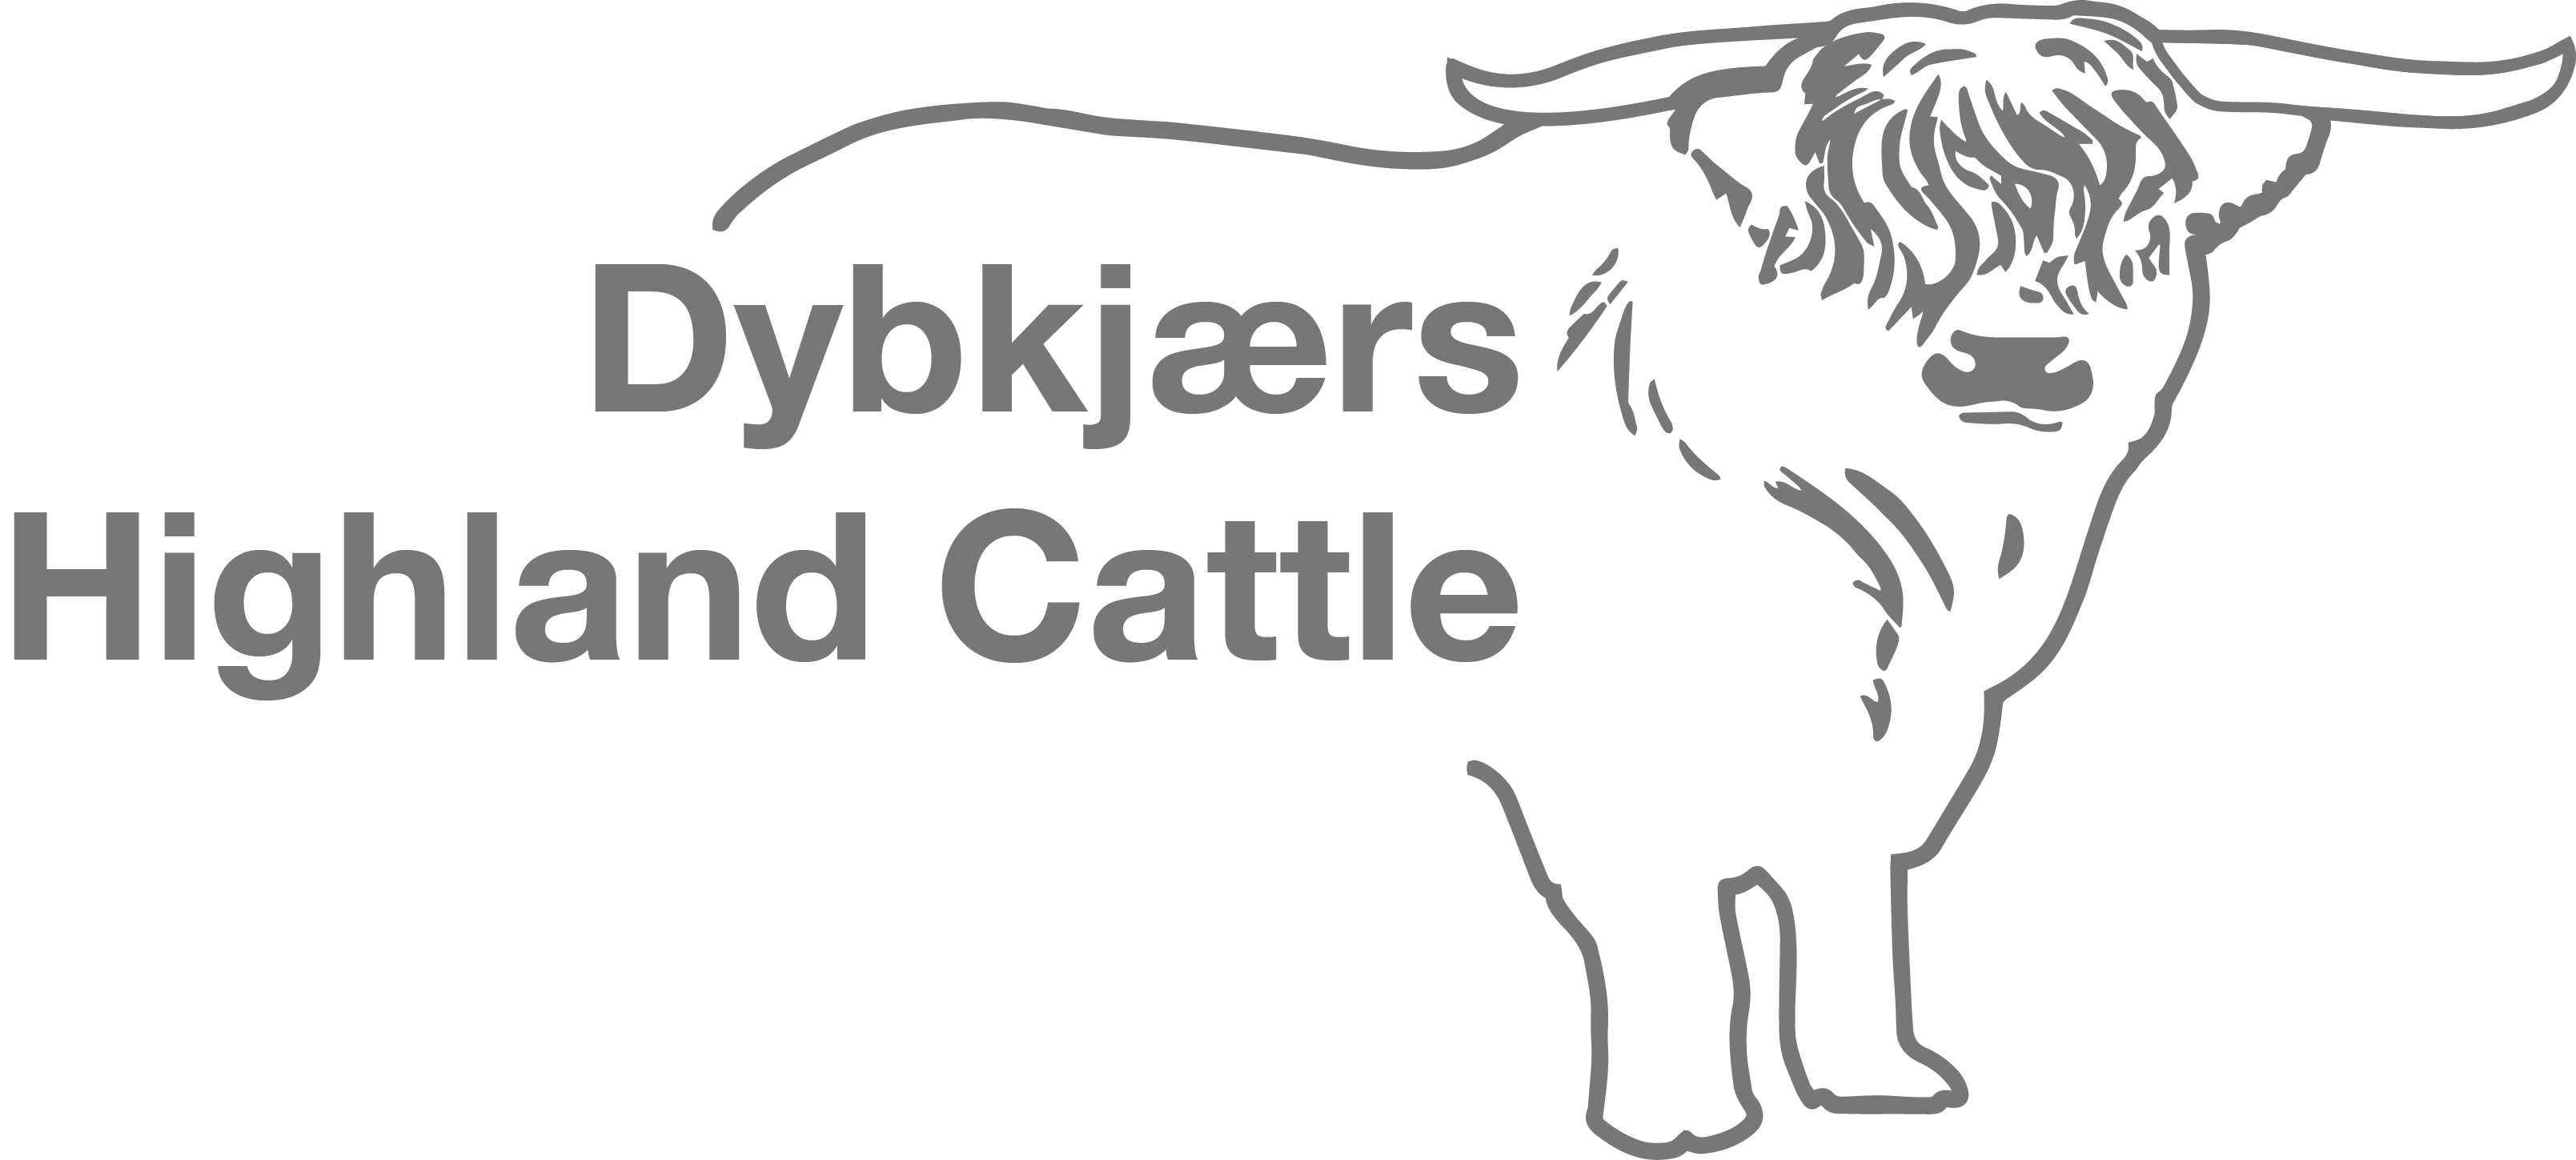 Dybkjærs Highland cattle logo